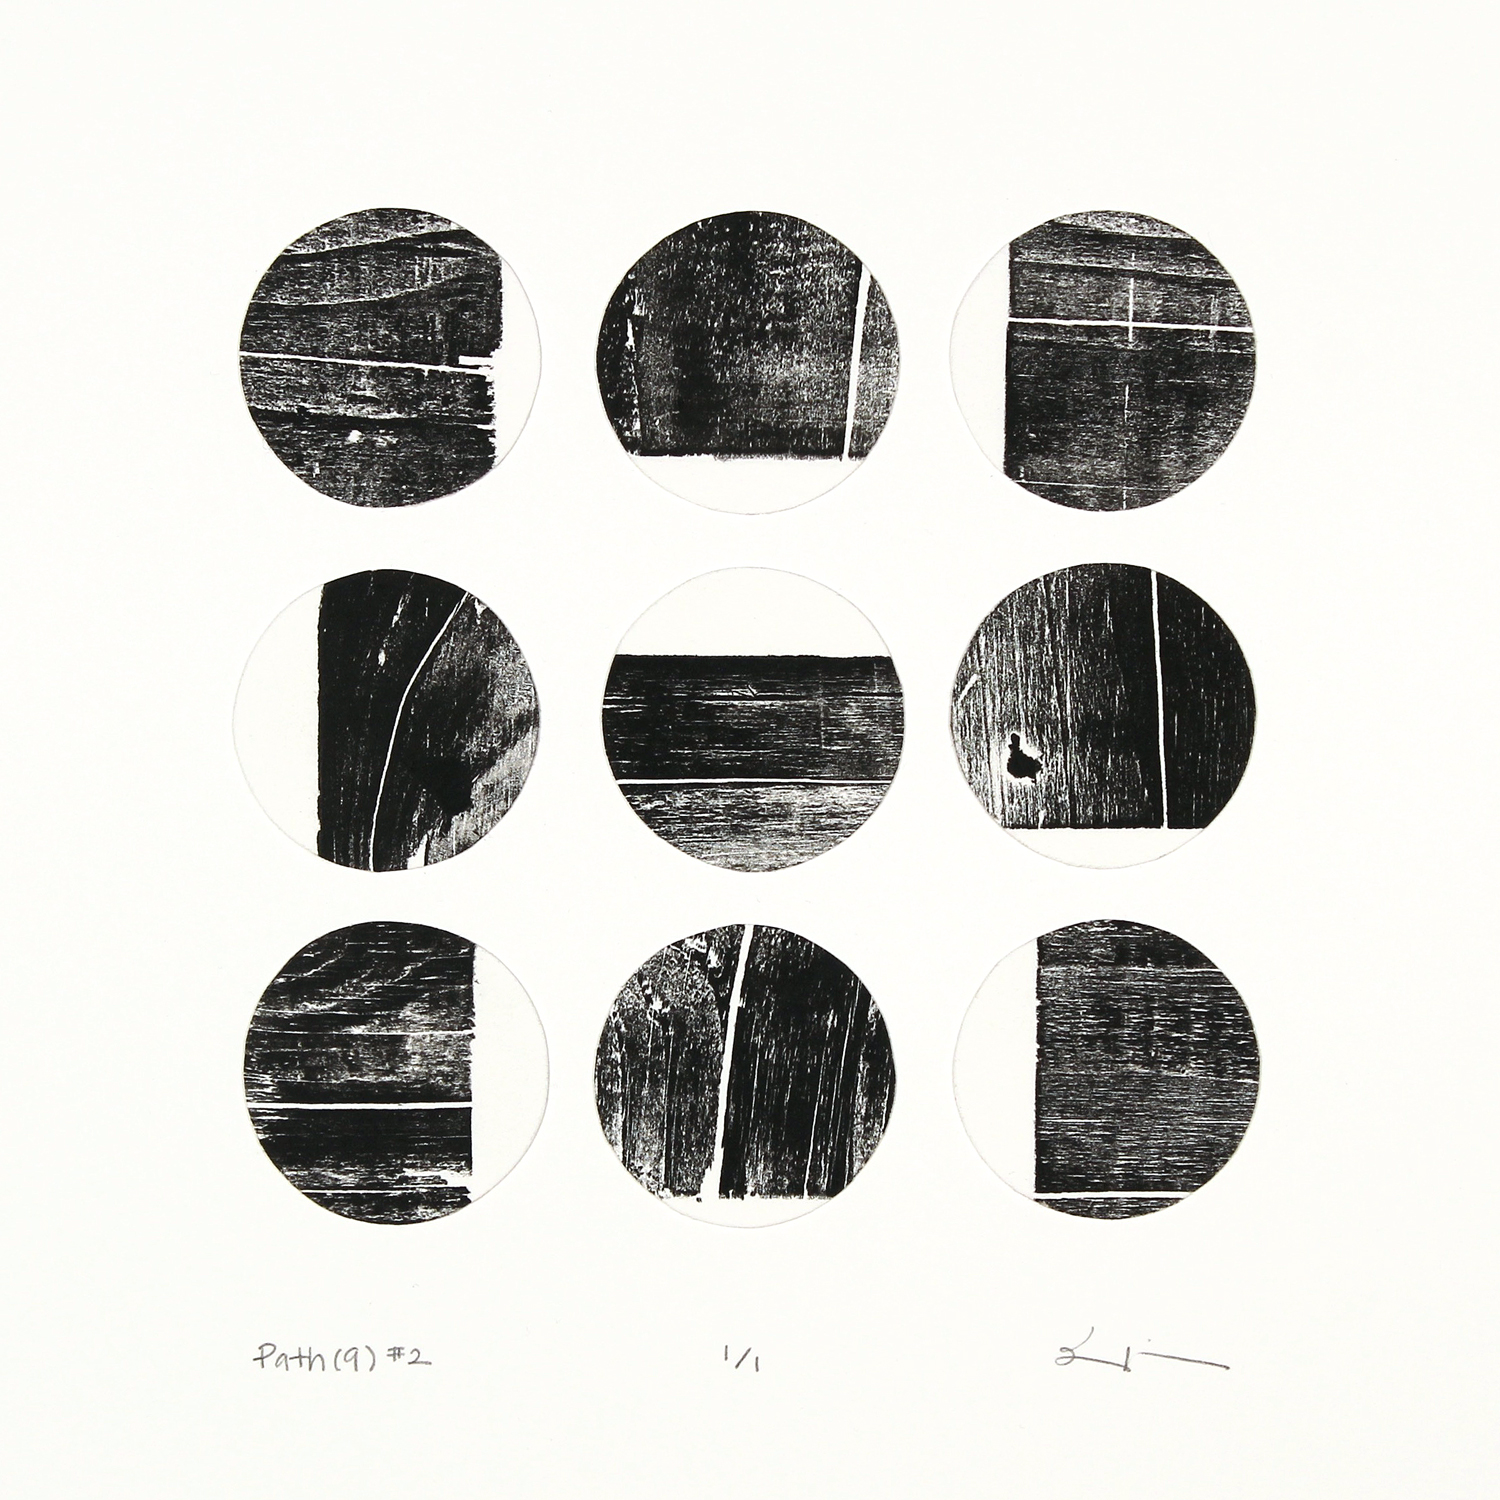   path(9) #2 , reclaimed wood monoprint, 2018 